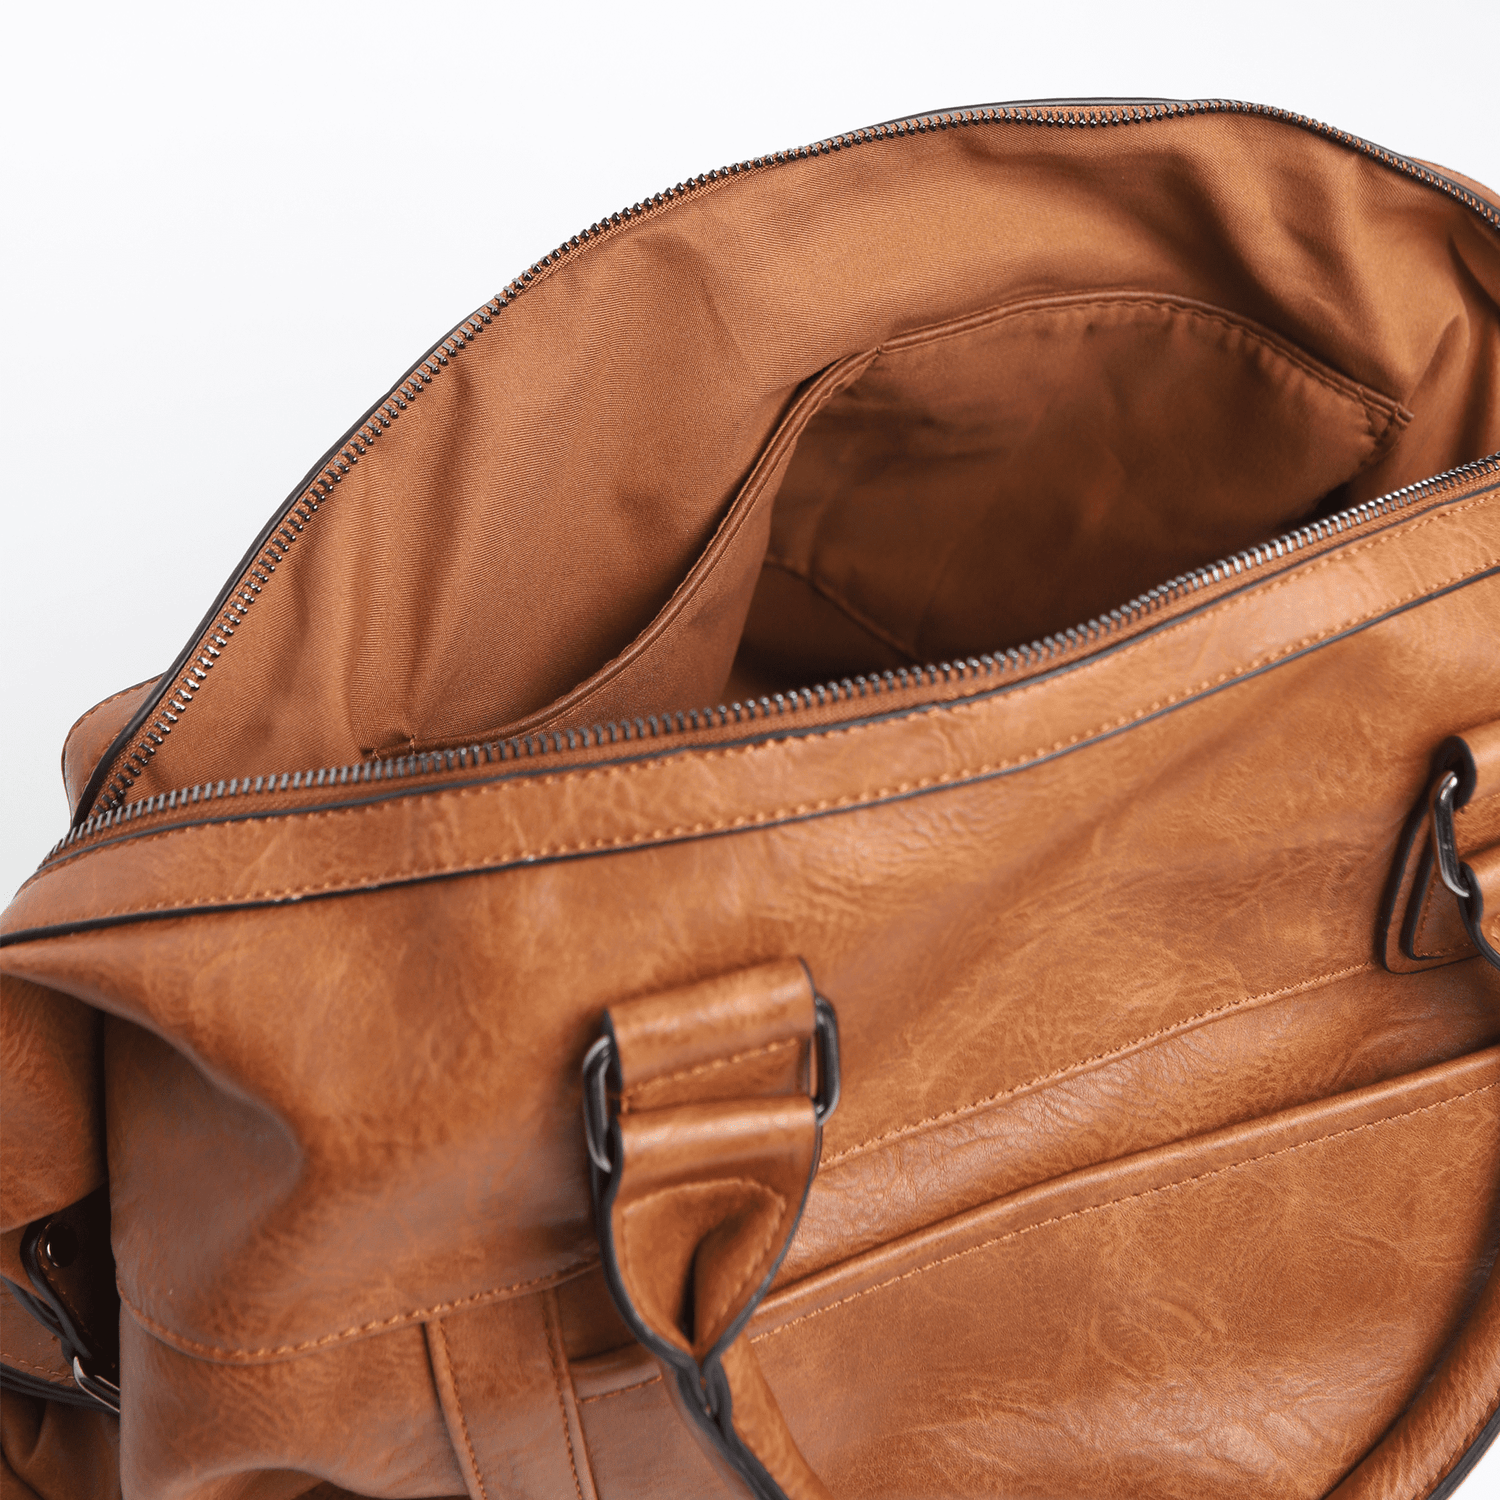 bagular weekend holdall bag for men. Black faux leather travel bag. Soft, lightweight and durable weekend bag, gift for him. Duffle Bag